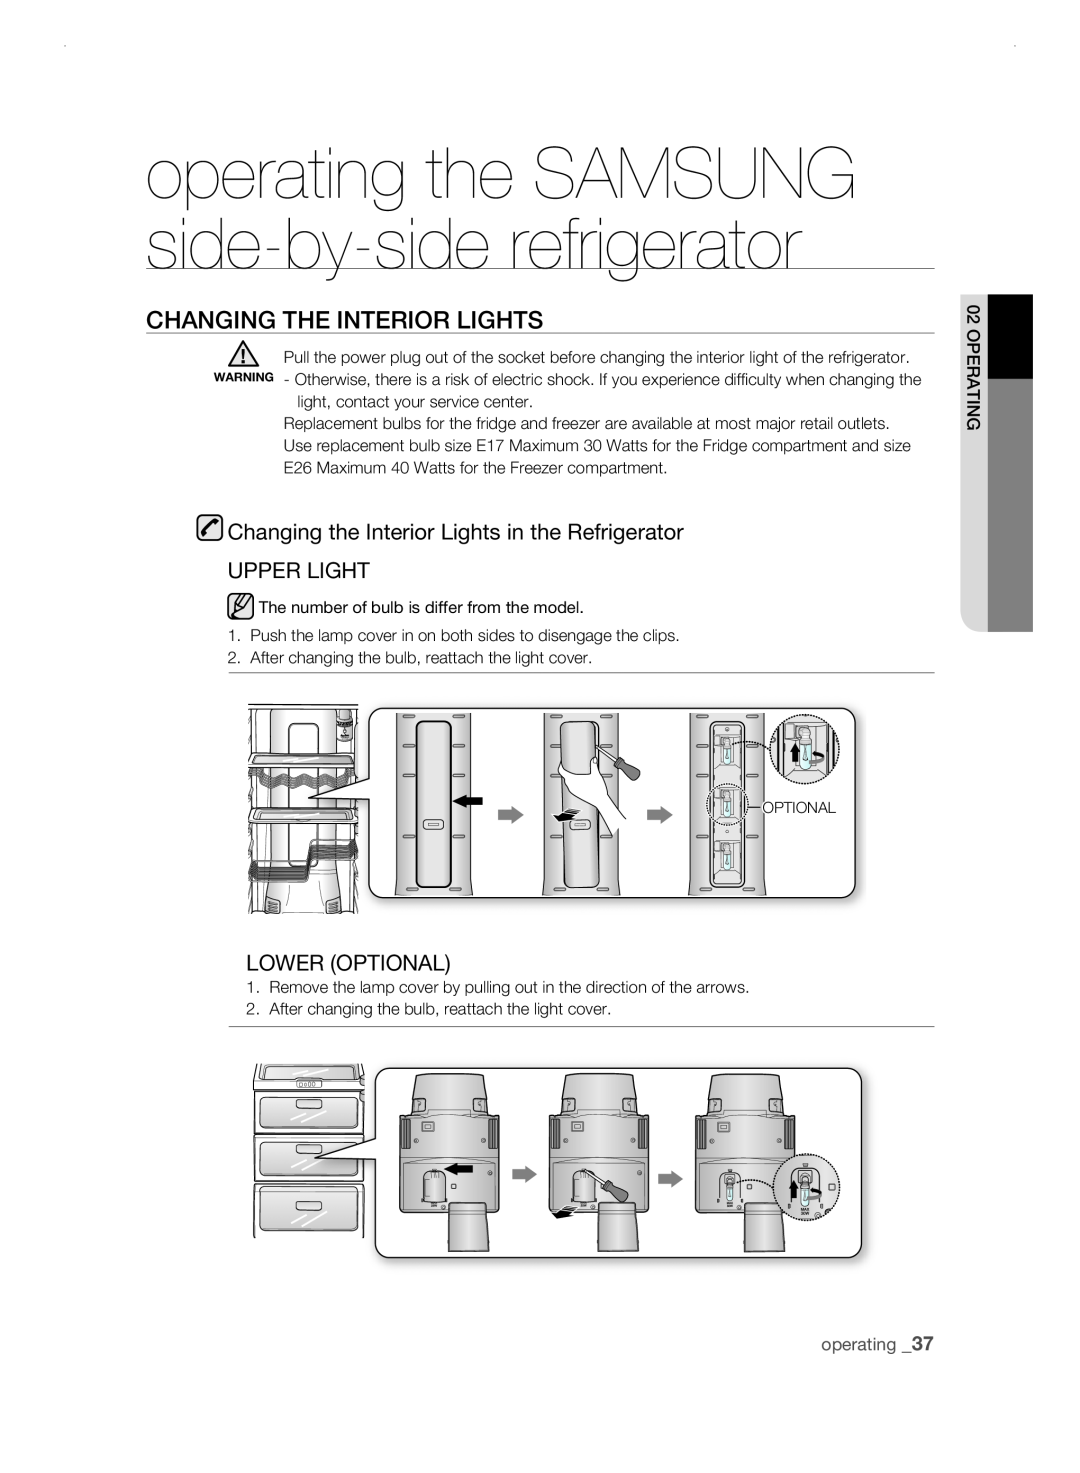 Samsung RSH3F CHanging tHE intErior LigHts, Changing the Interior Lights in the Refrigerator UPPER LIGHT, Lower Optional 